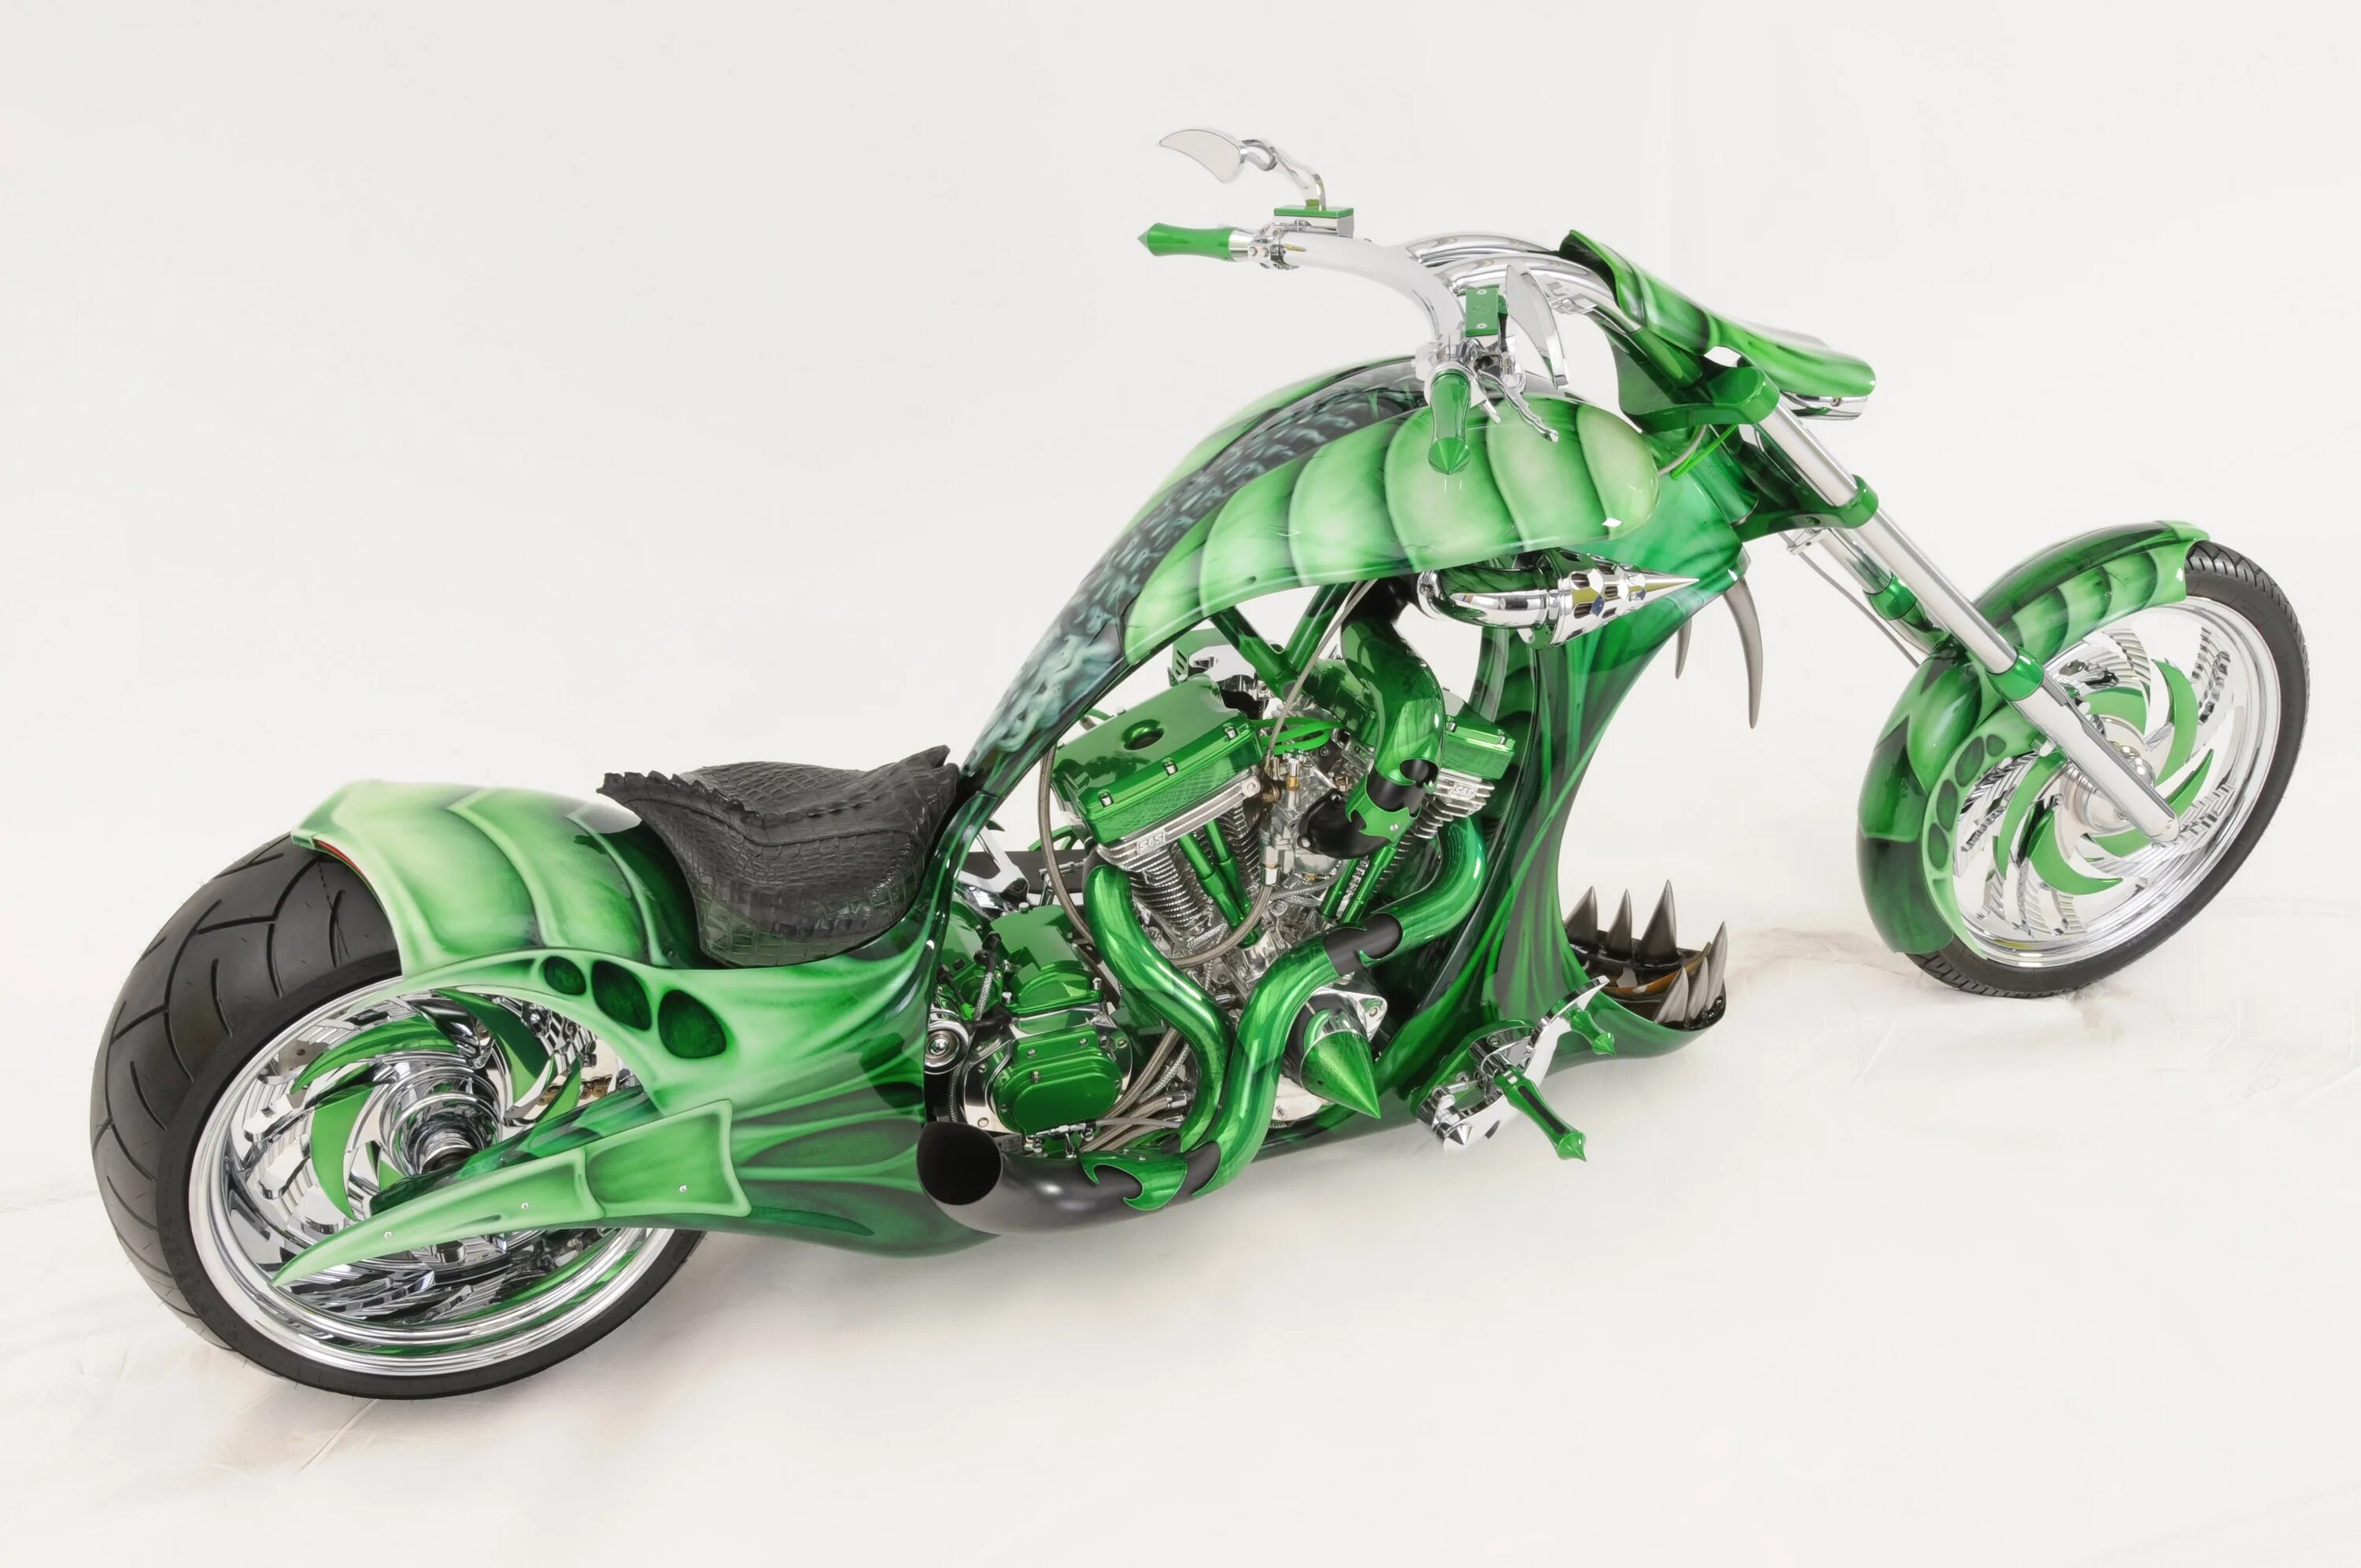 Forms tuning. Кавасаки зеленый мотоцикл чоппер. Харли Дэвидсон зеленый. Необычные мотоциклы. Крутые байки.